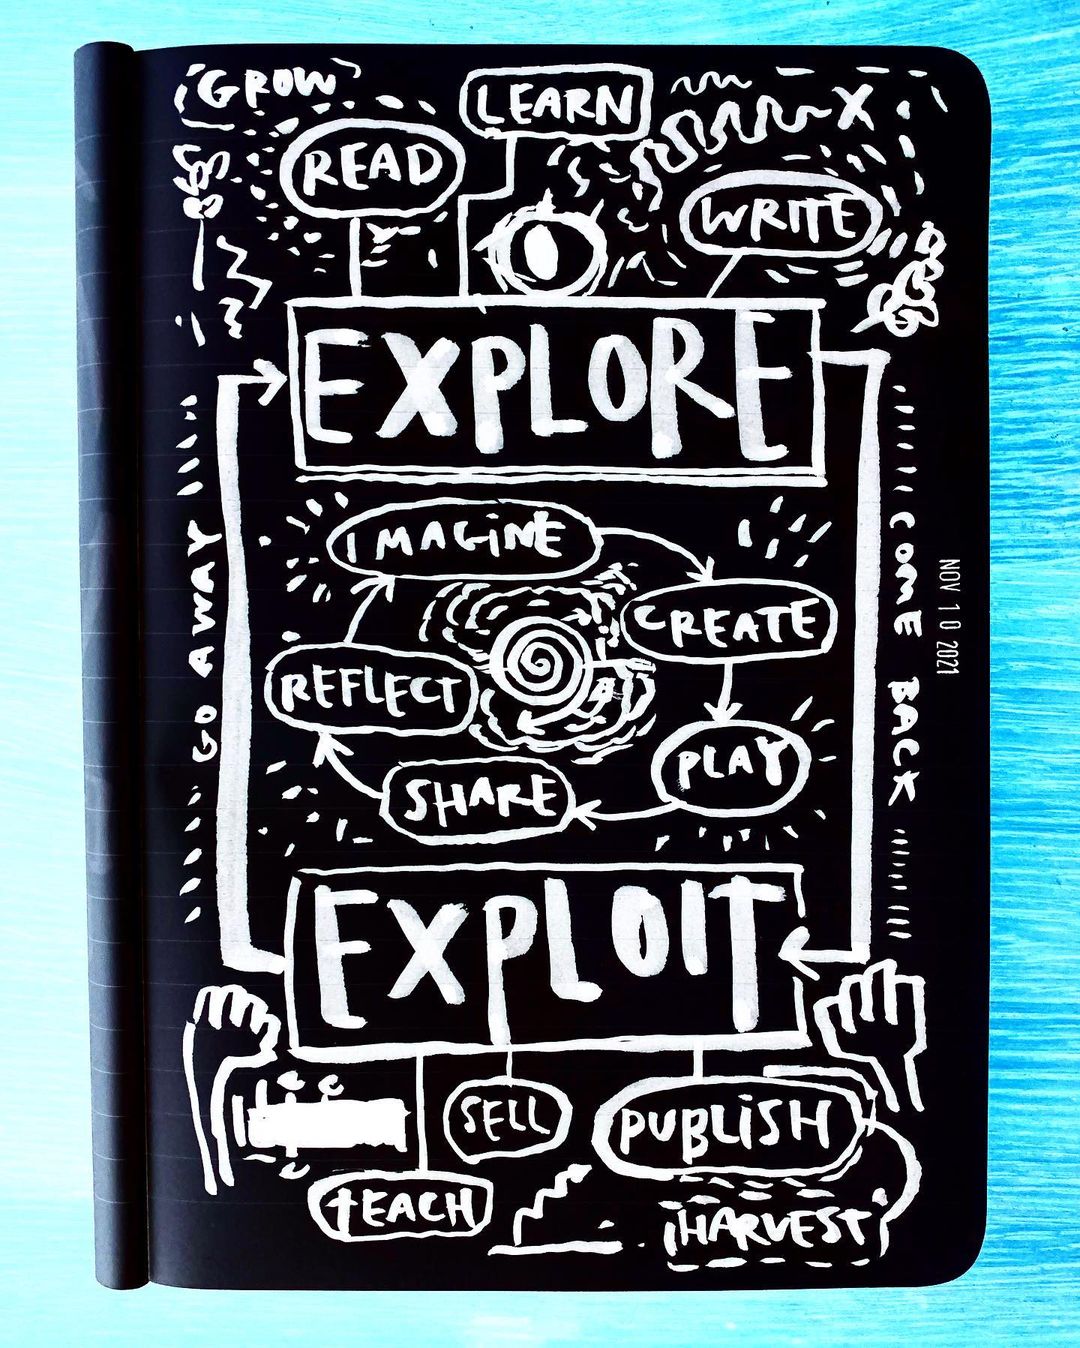 Exploit or explore?